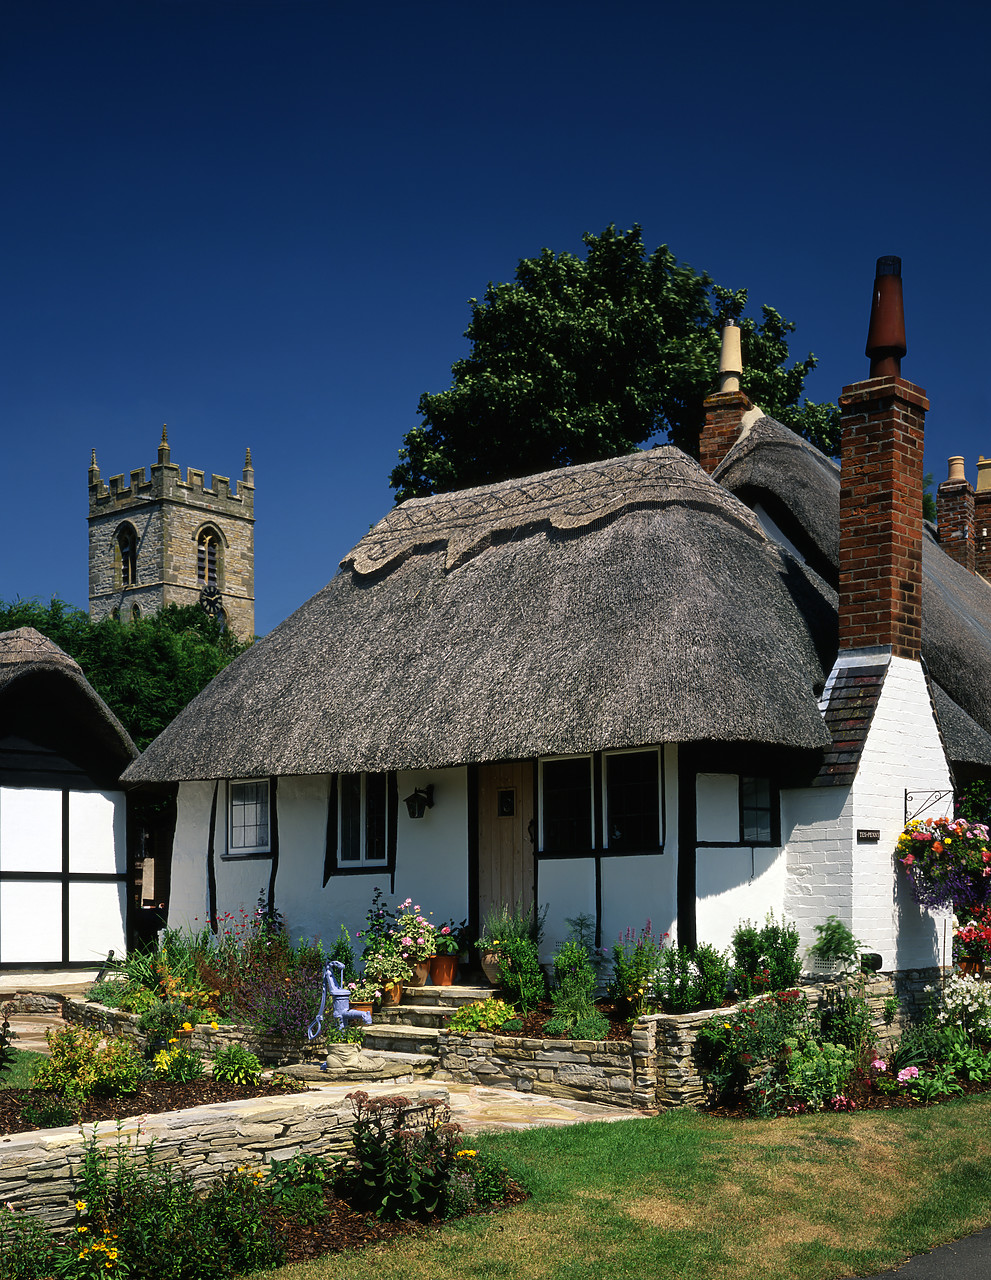 #990480-5 - Ten Penny Cottage, Welford-on-Avon, Warwickshire, England